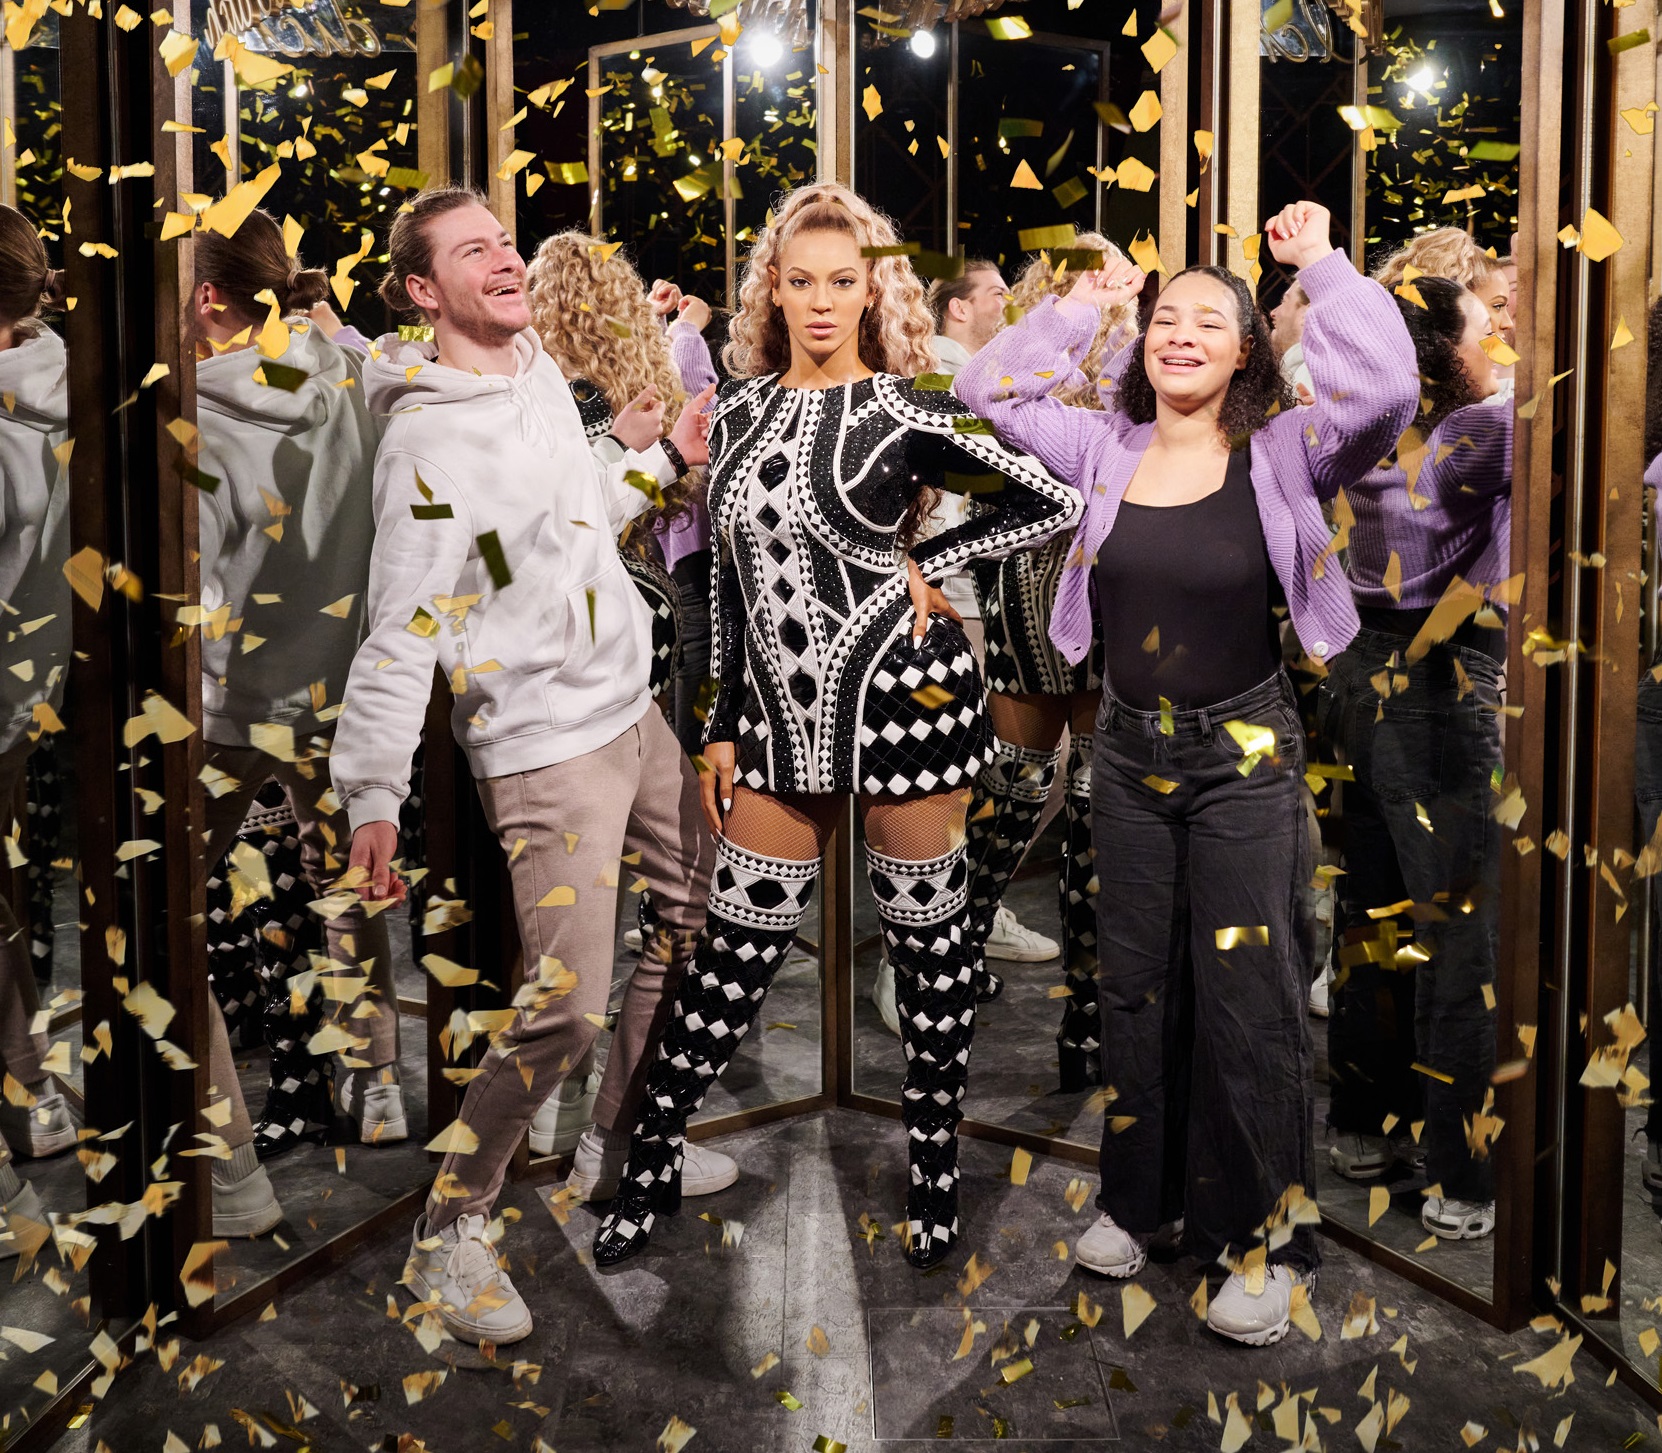 Meet the queen Beyoncé Knowles at Madame Tussauds Berlin